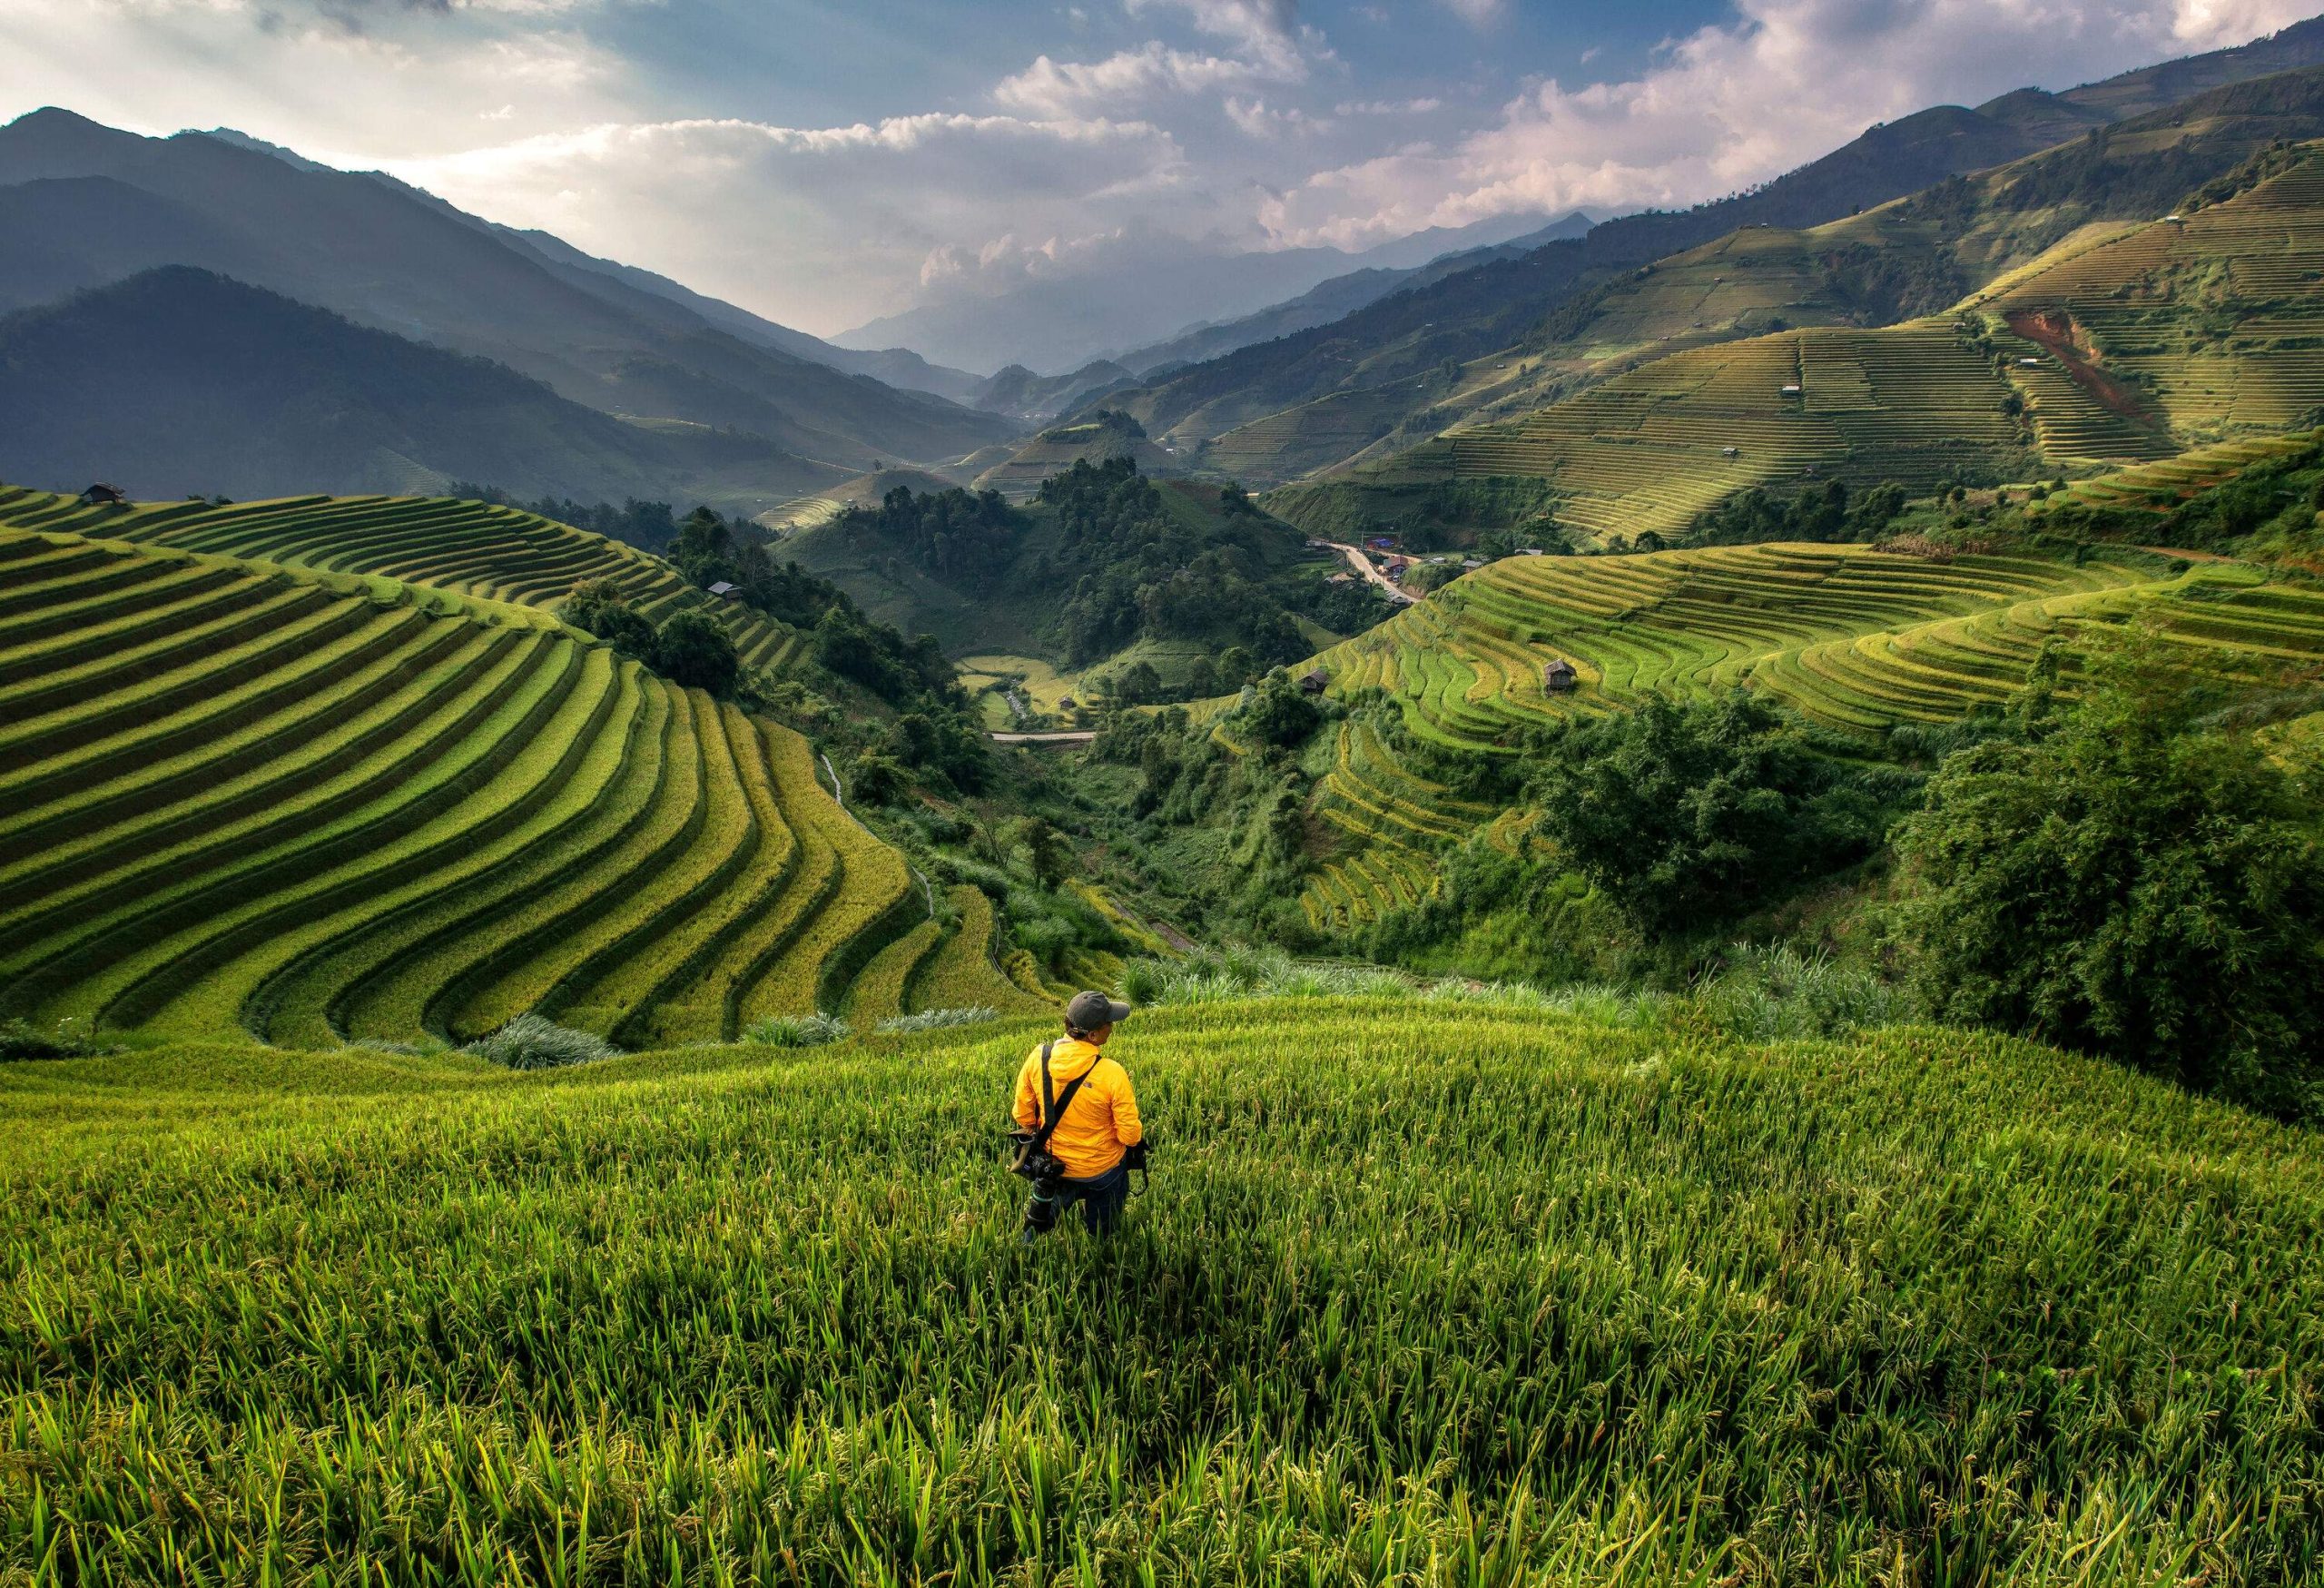 A man in a yellow jacket walking across a lush hillside with breathtaking views of terraced rice fields.